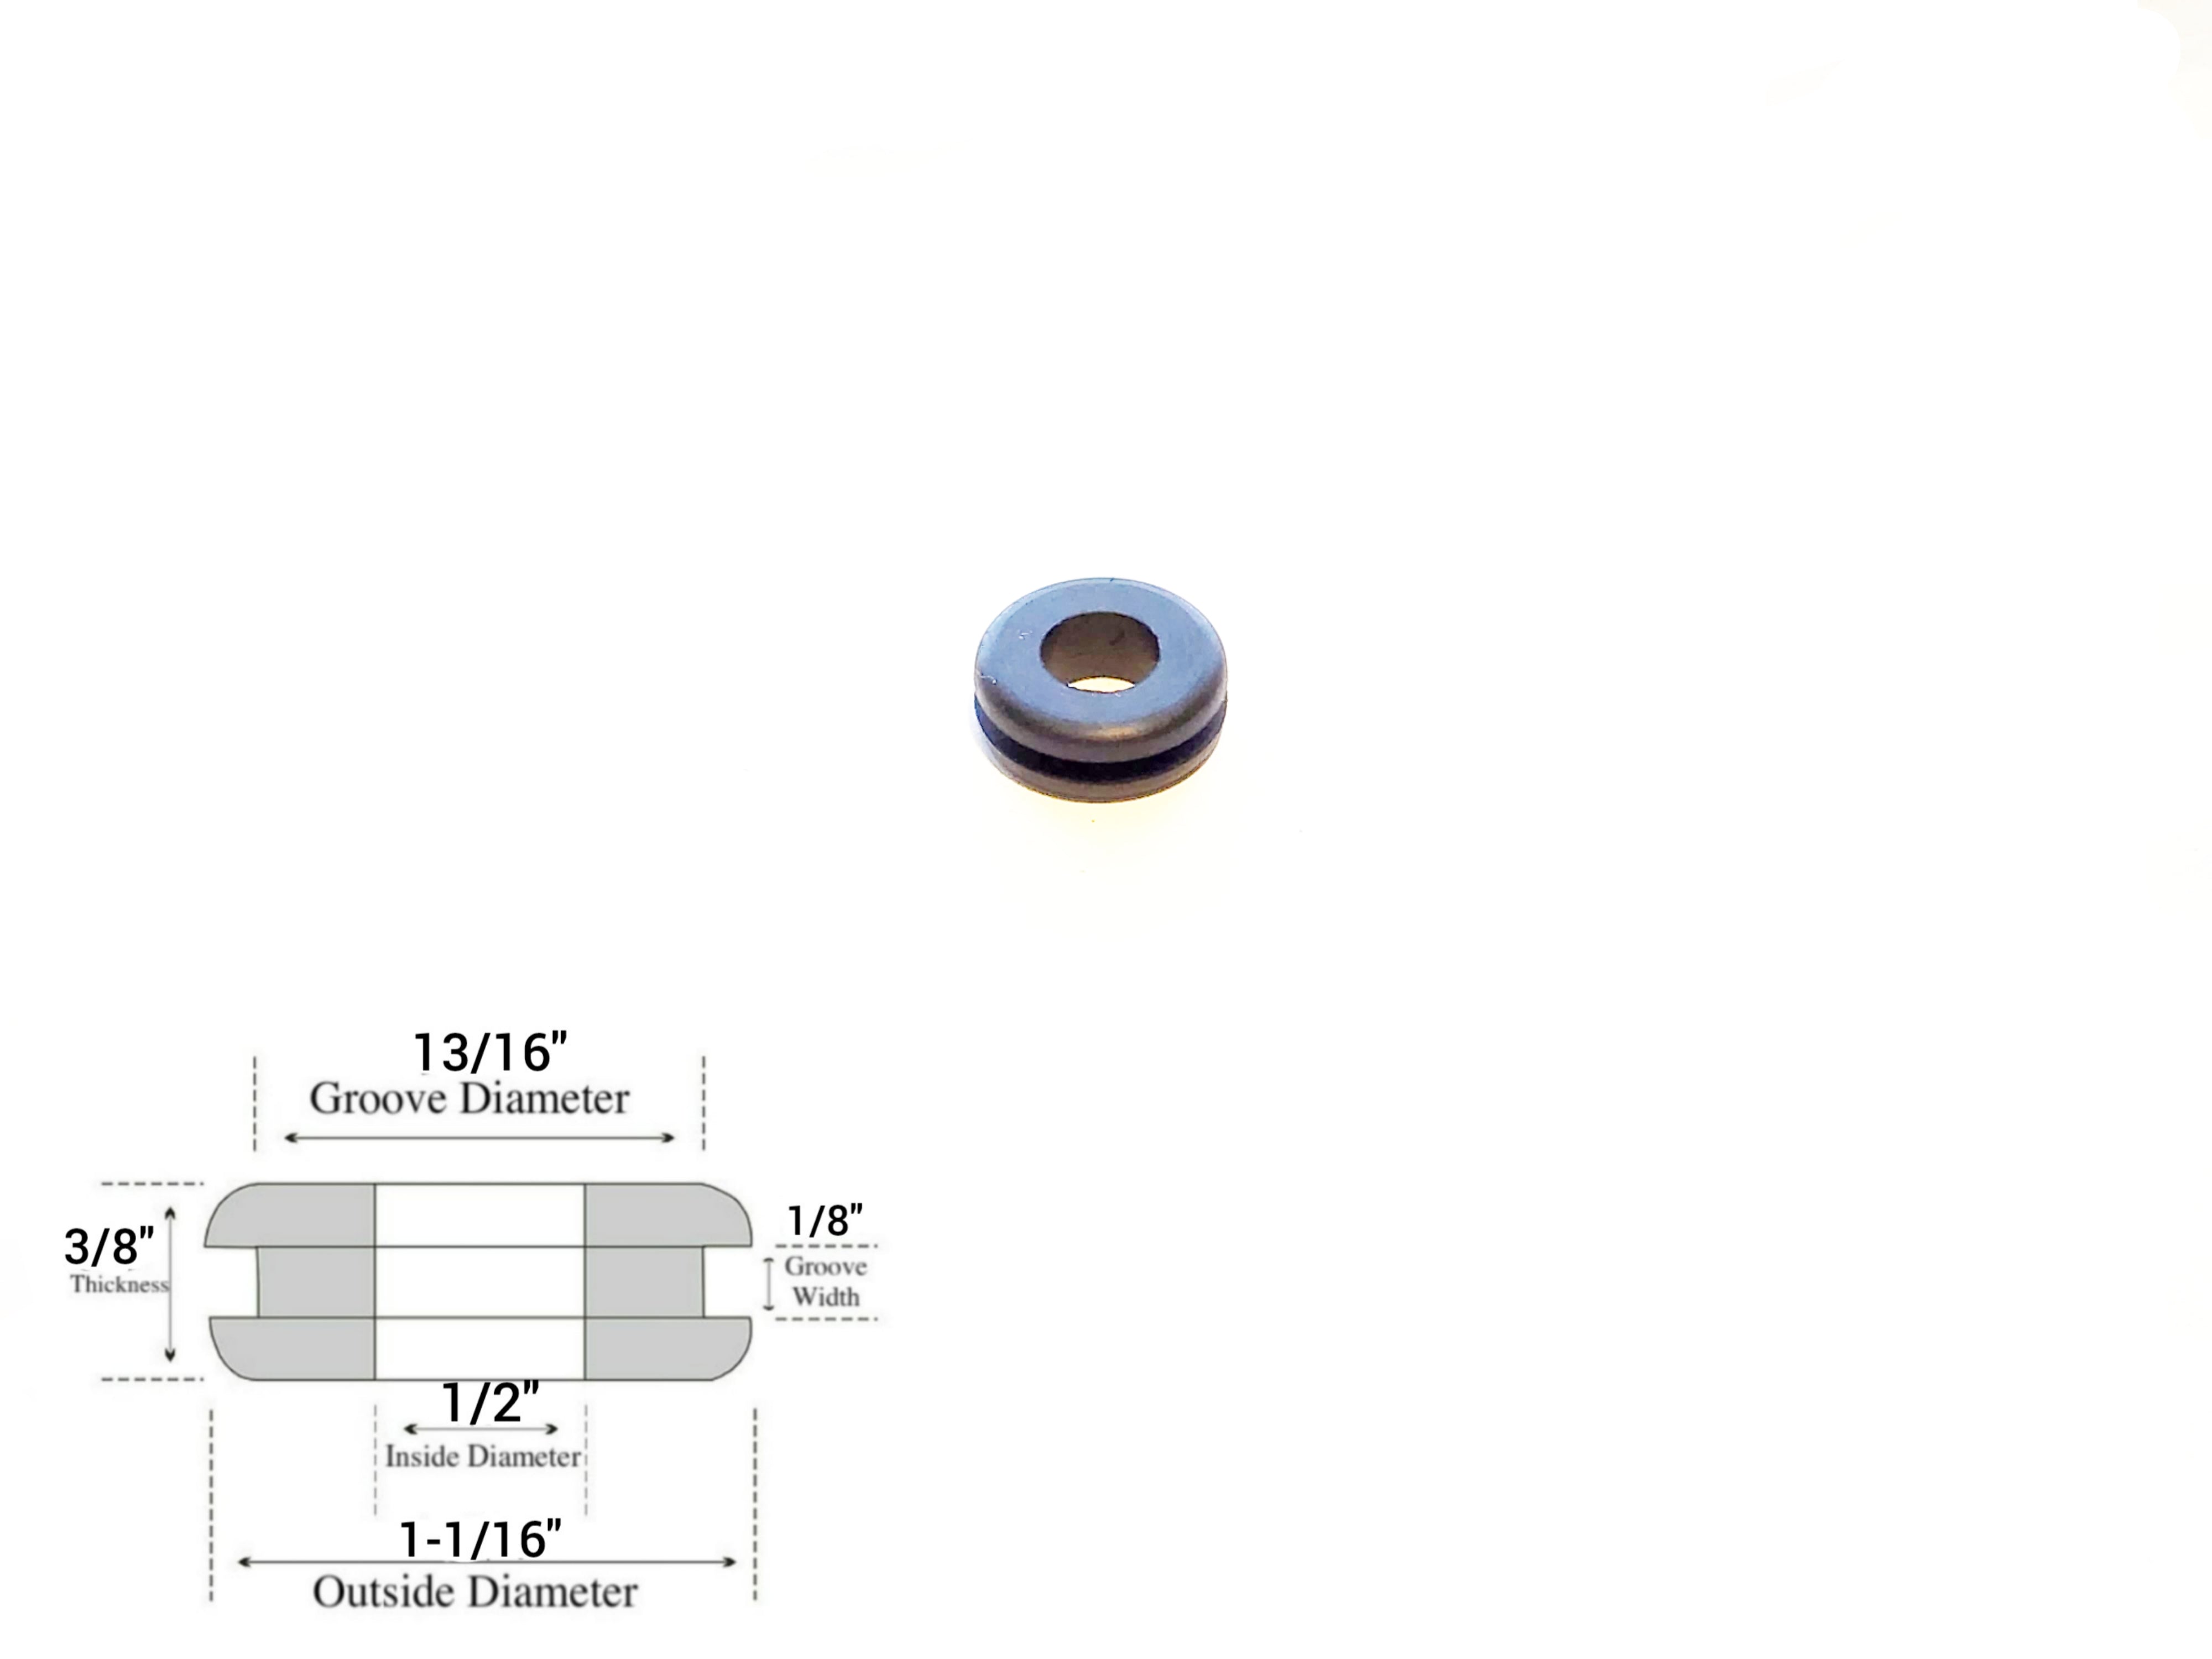 1/2 Inside Diameter Rubber Grommet - 1/8 Groove Width - Fits 13/16 Holes